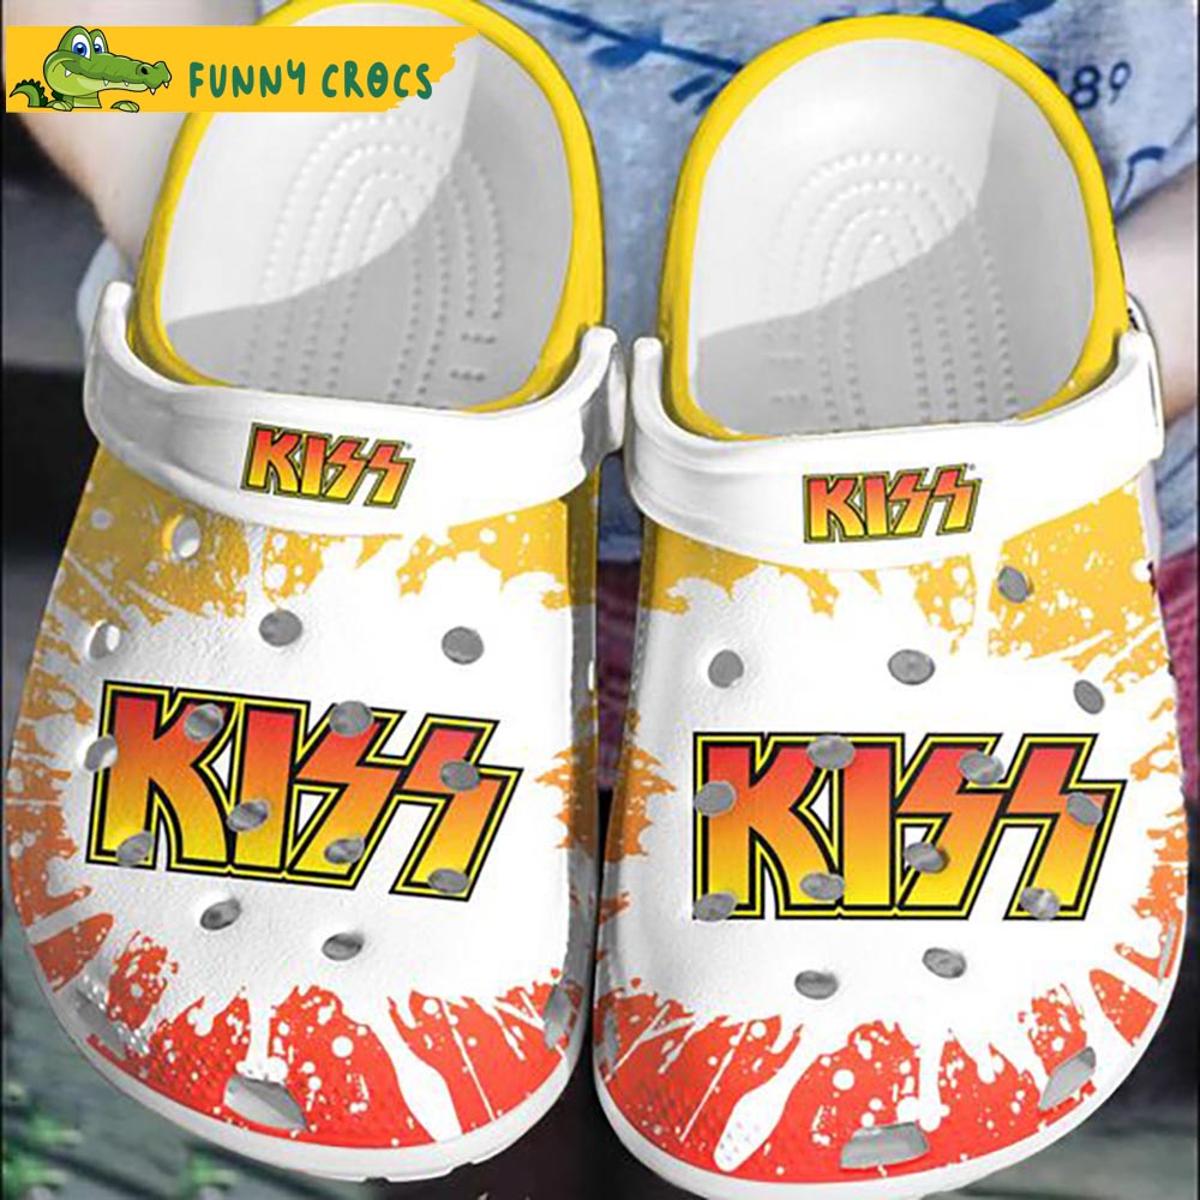 Funny Kiss Band Crocs Shoes